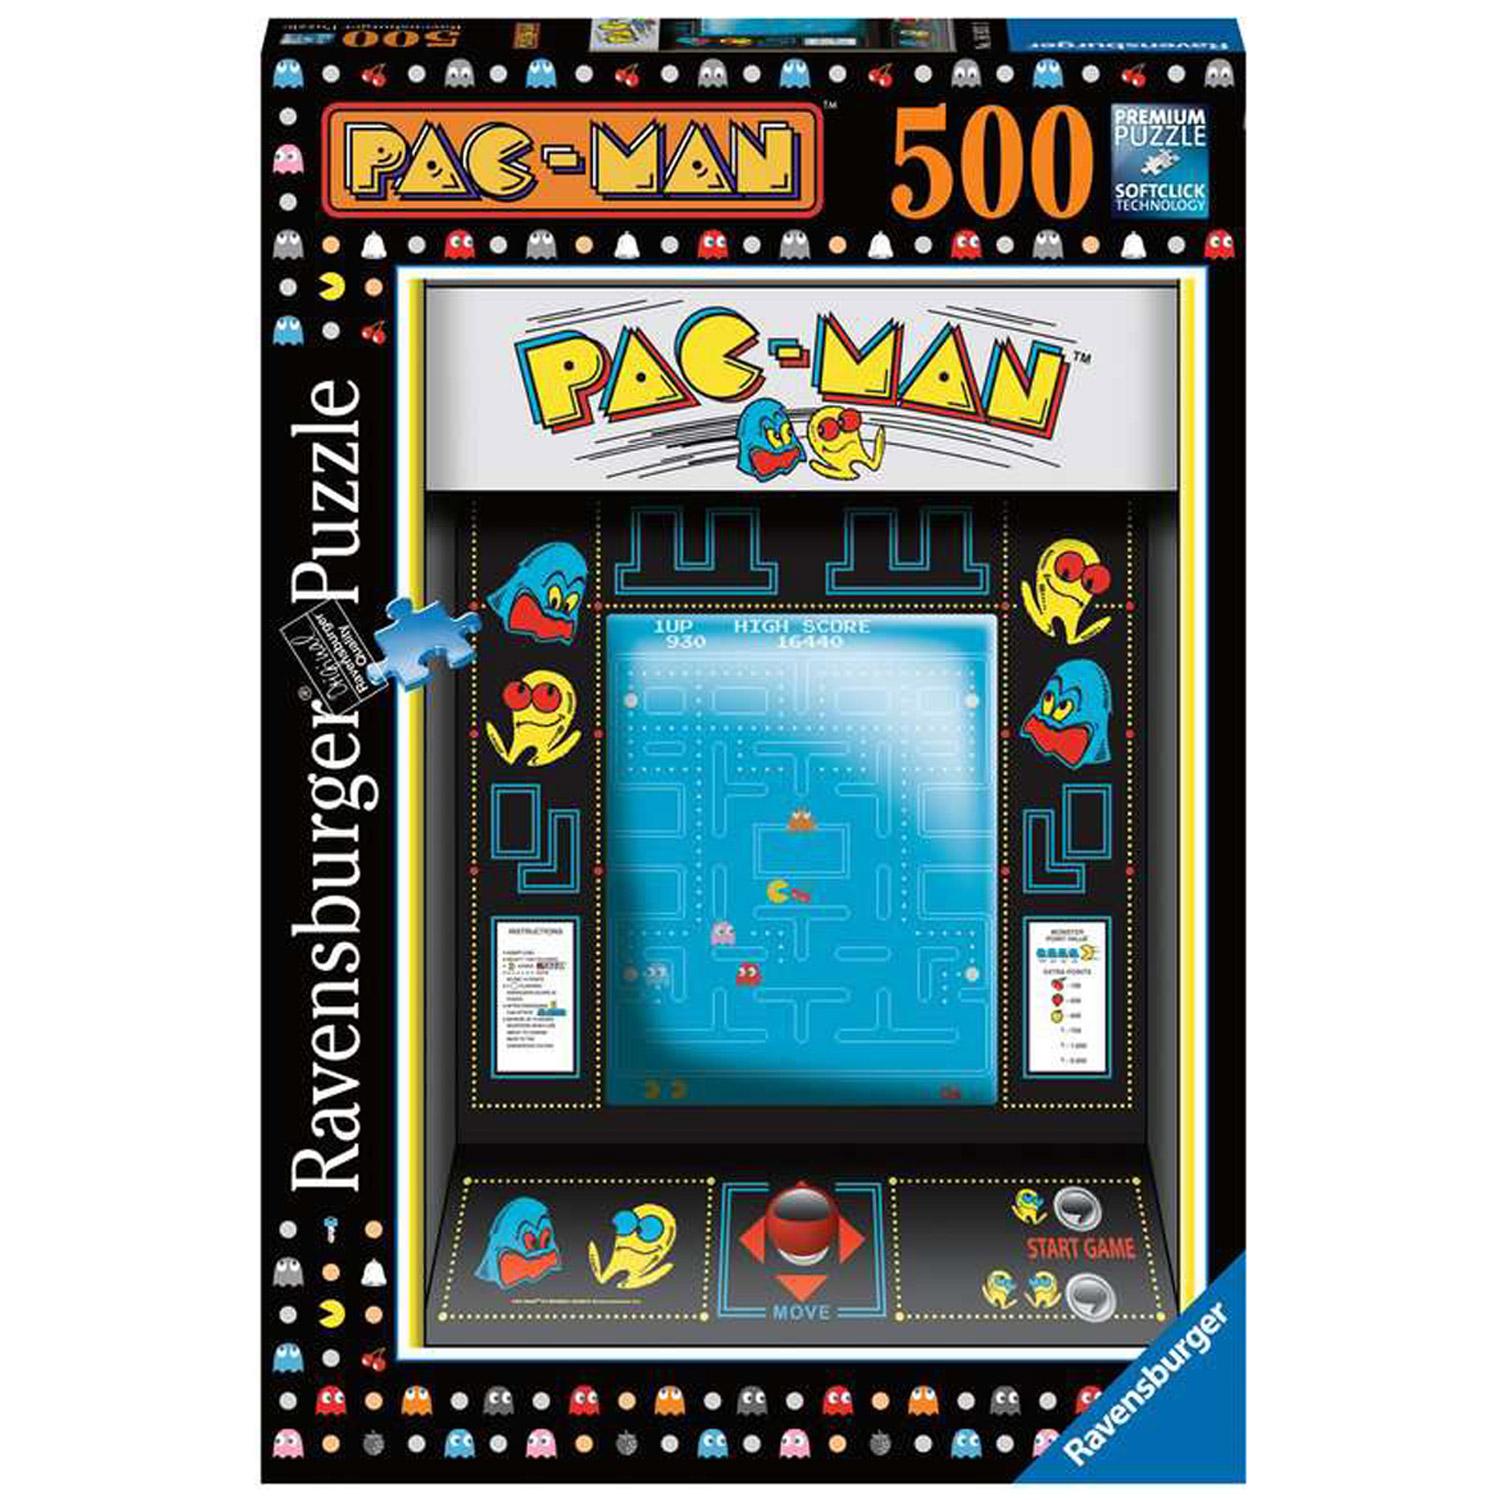 500 piece puzzle: Pac-Man arcade game - Ravensburger - Puzzle